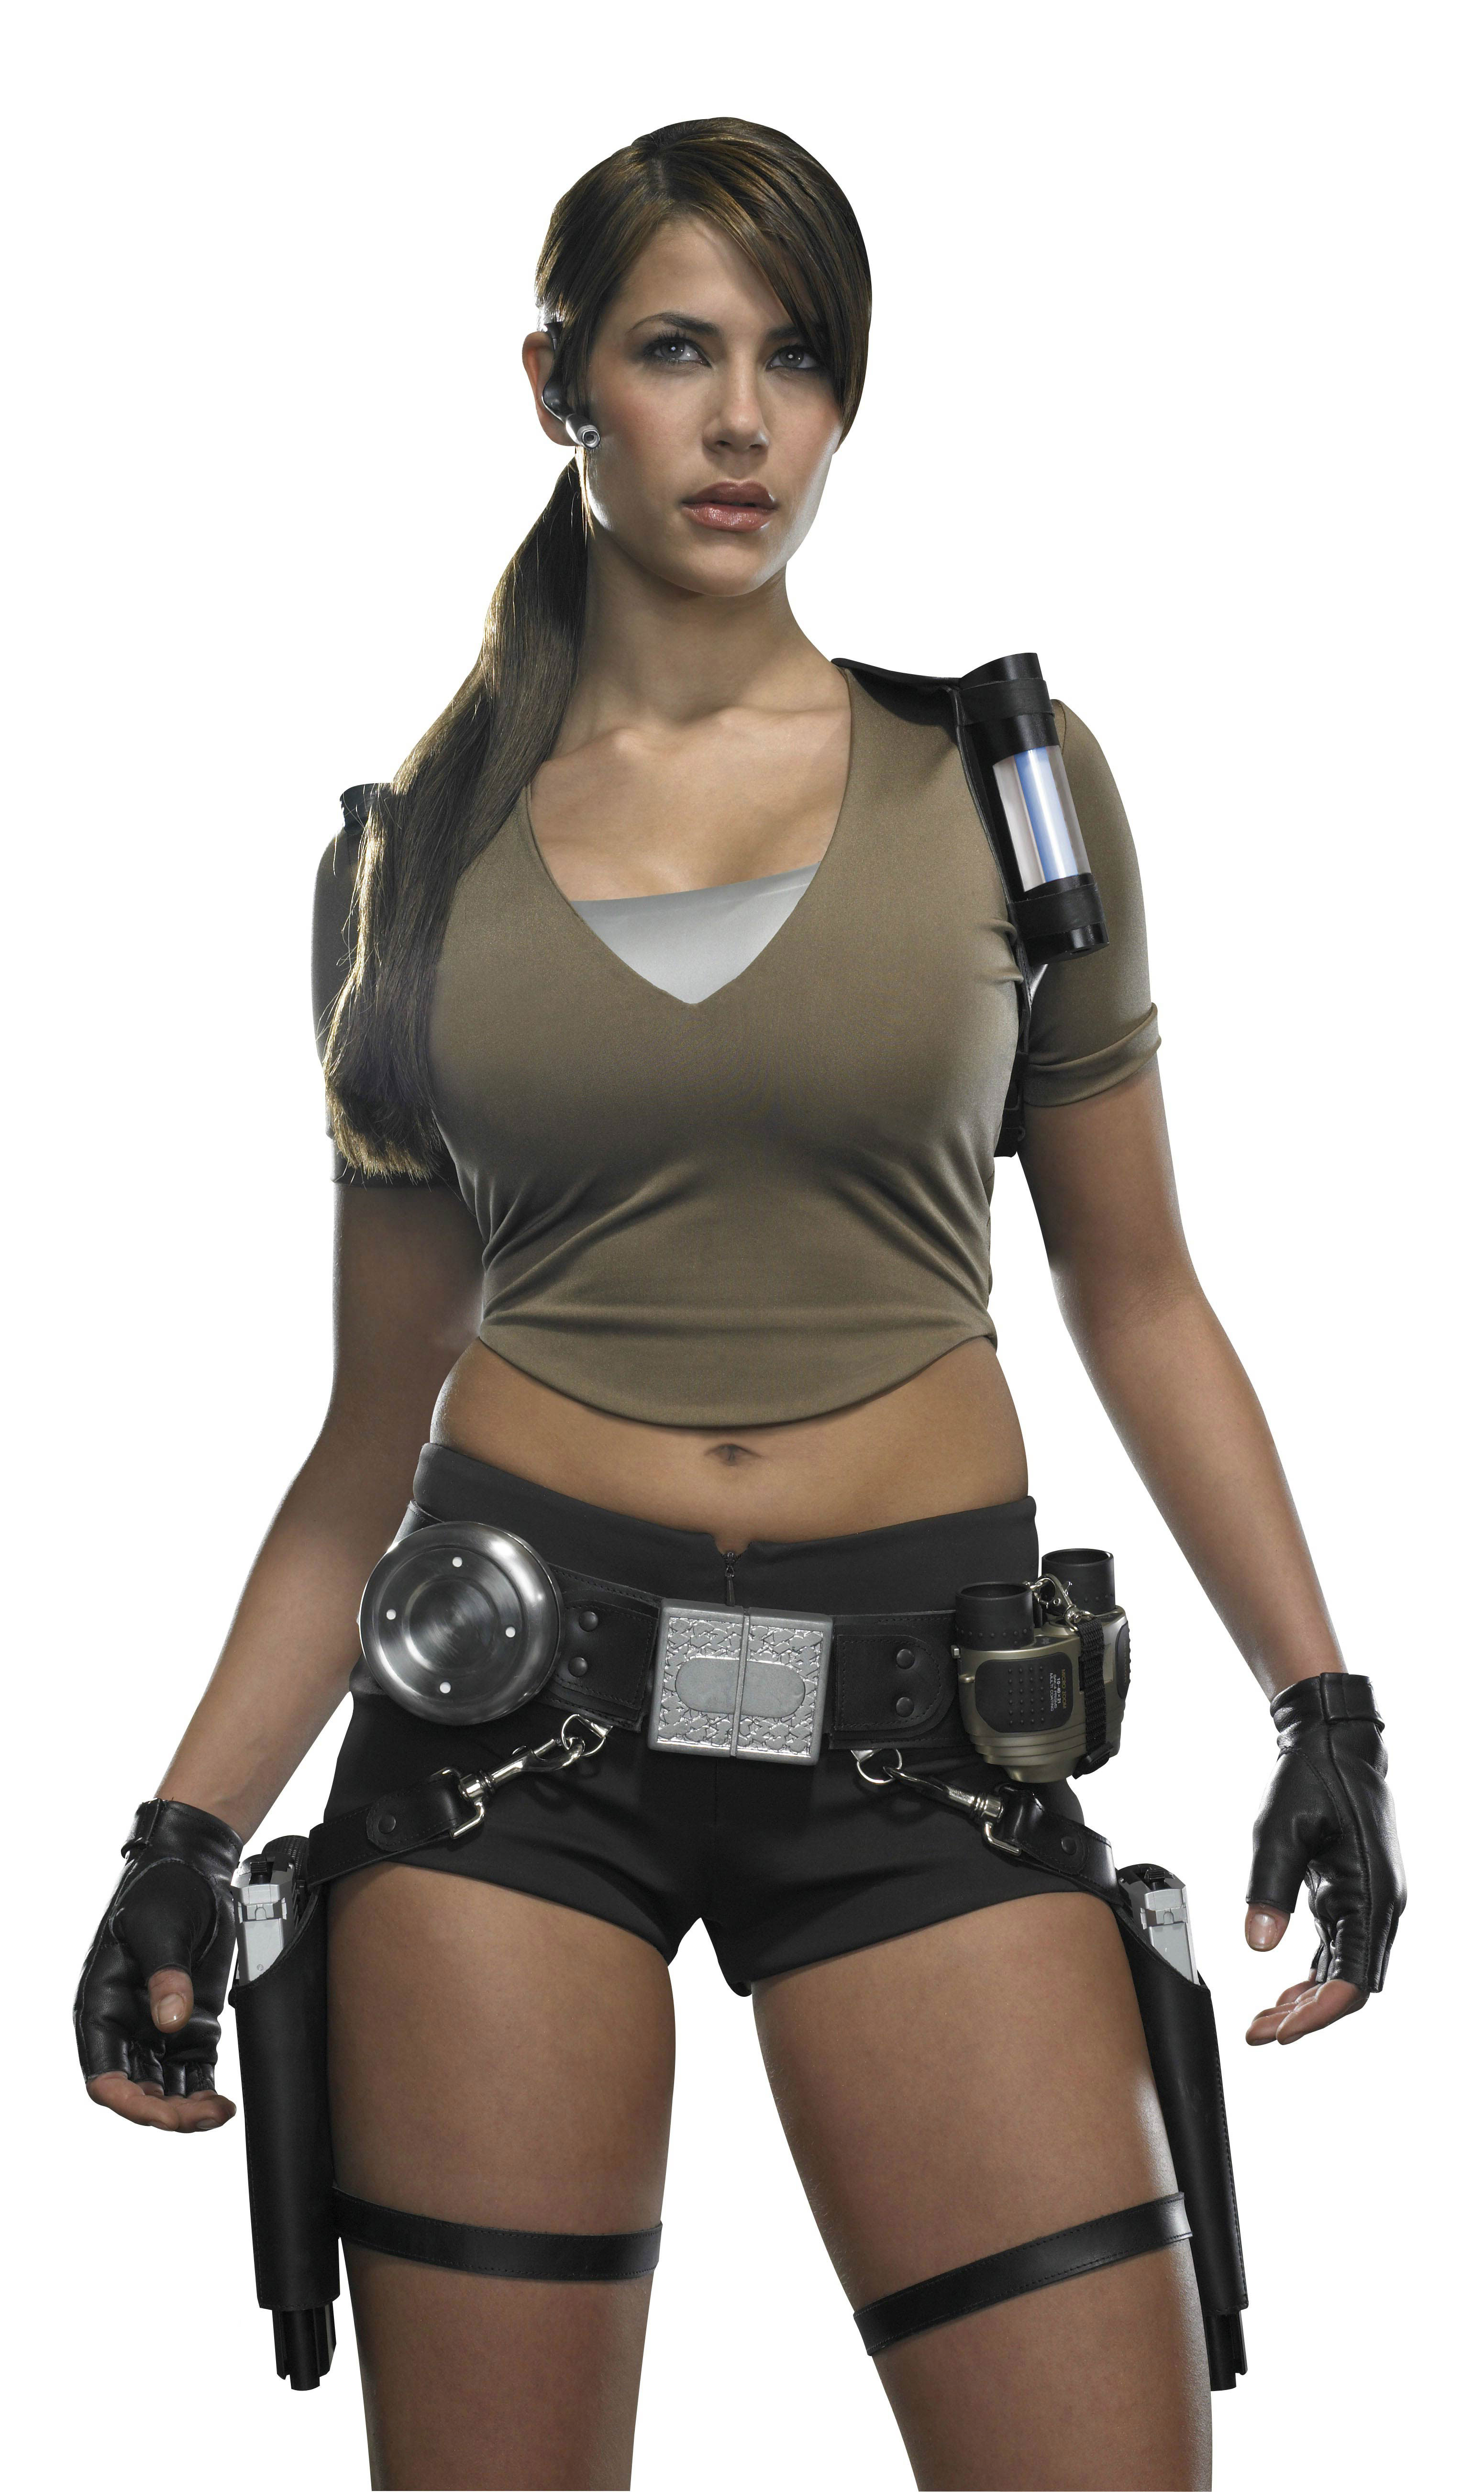 New Lara Croft Unveiled Bit